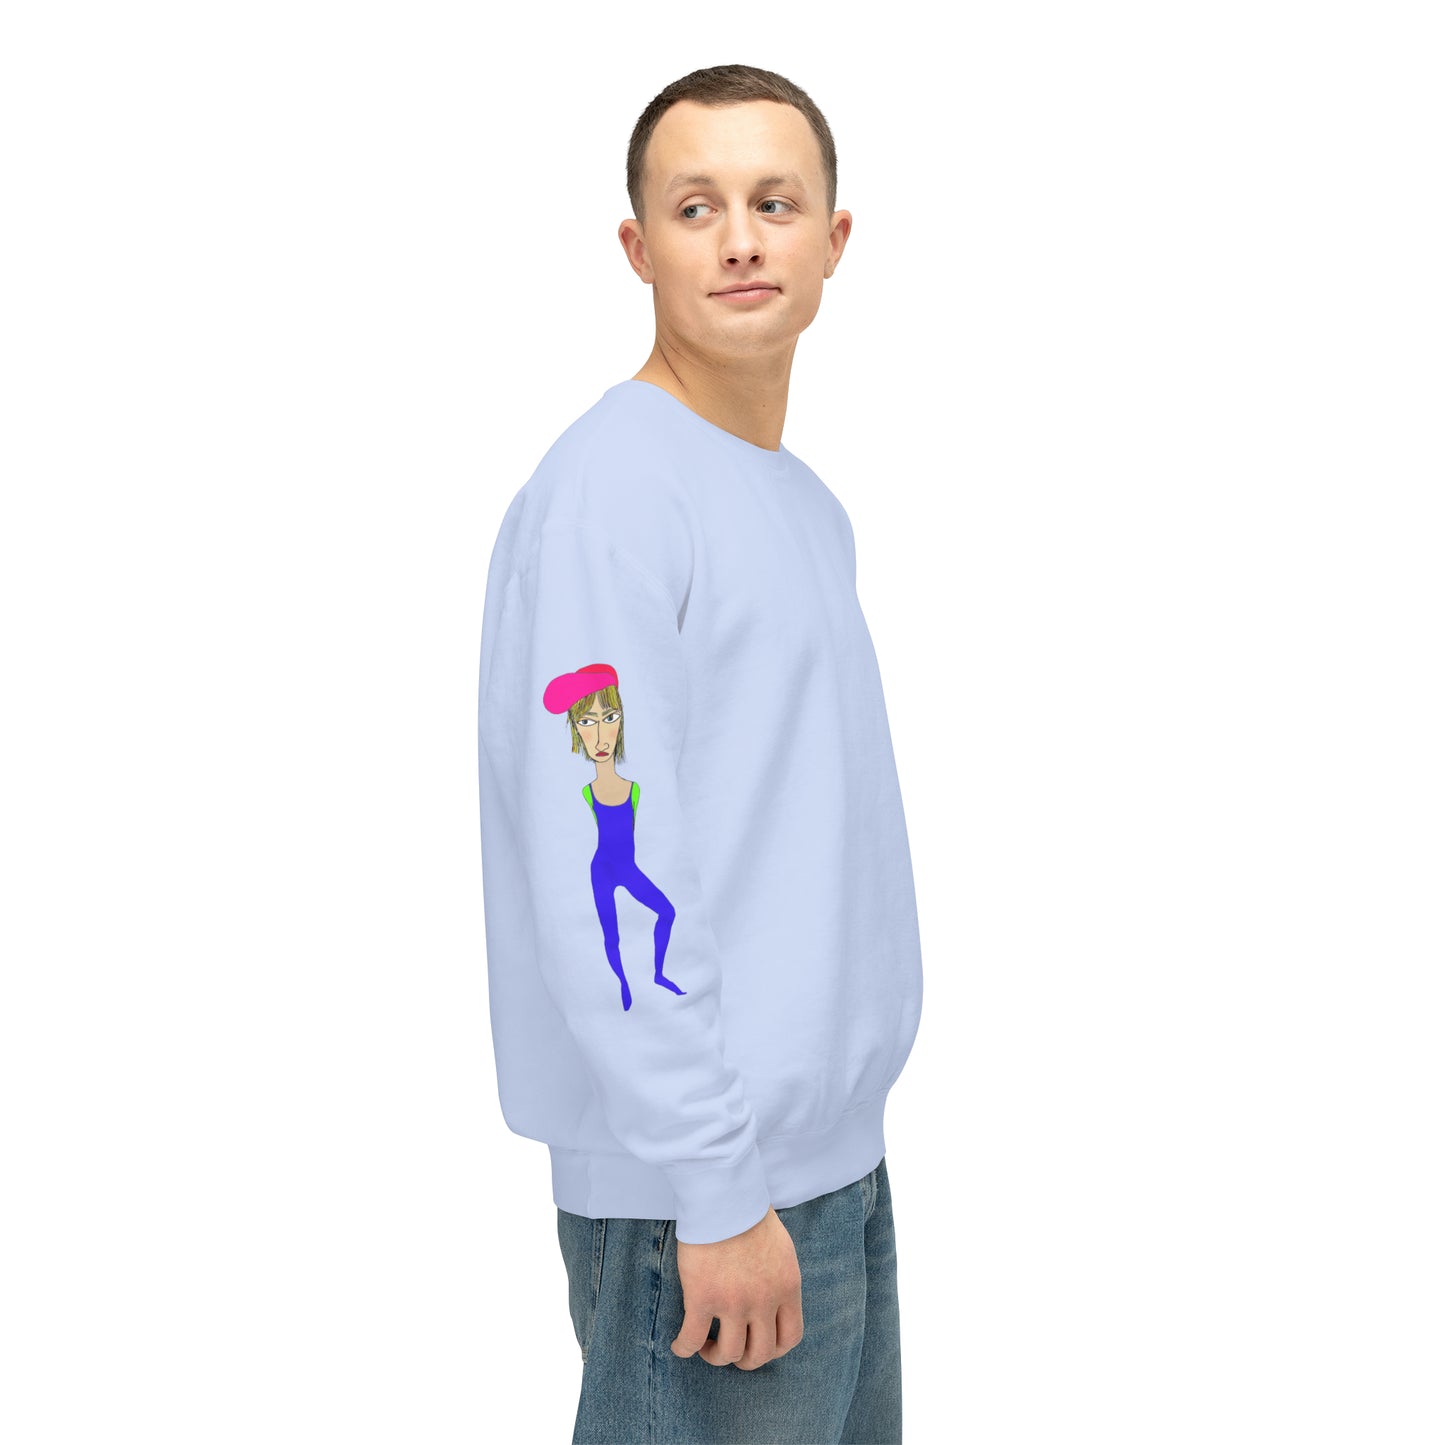 Cody Crewneck Sweatshirt